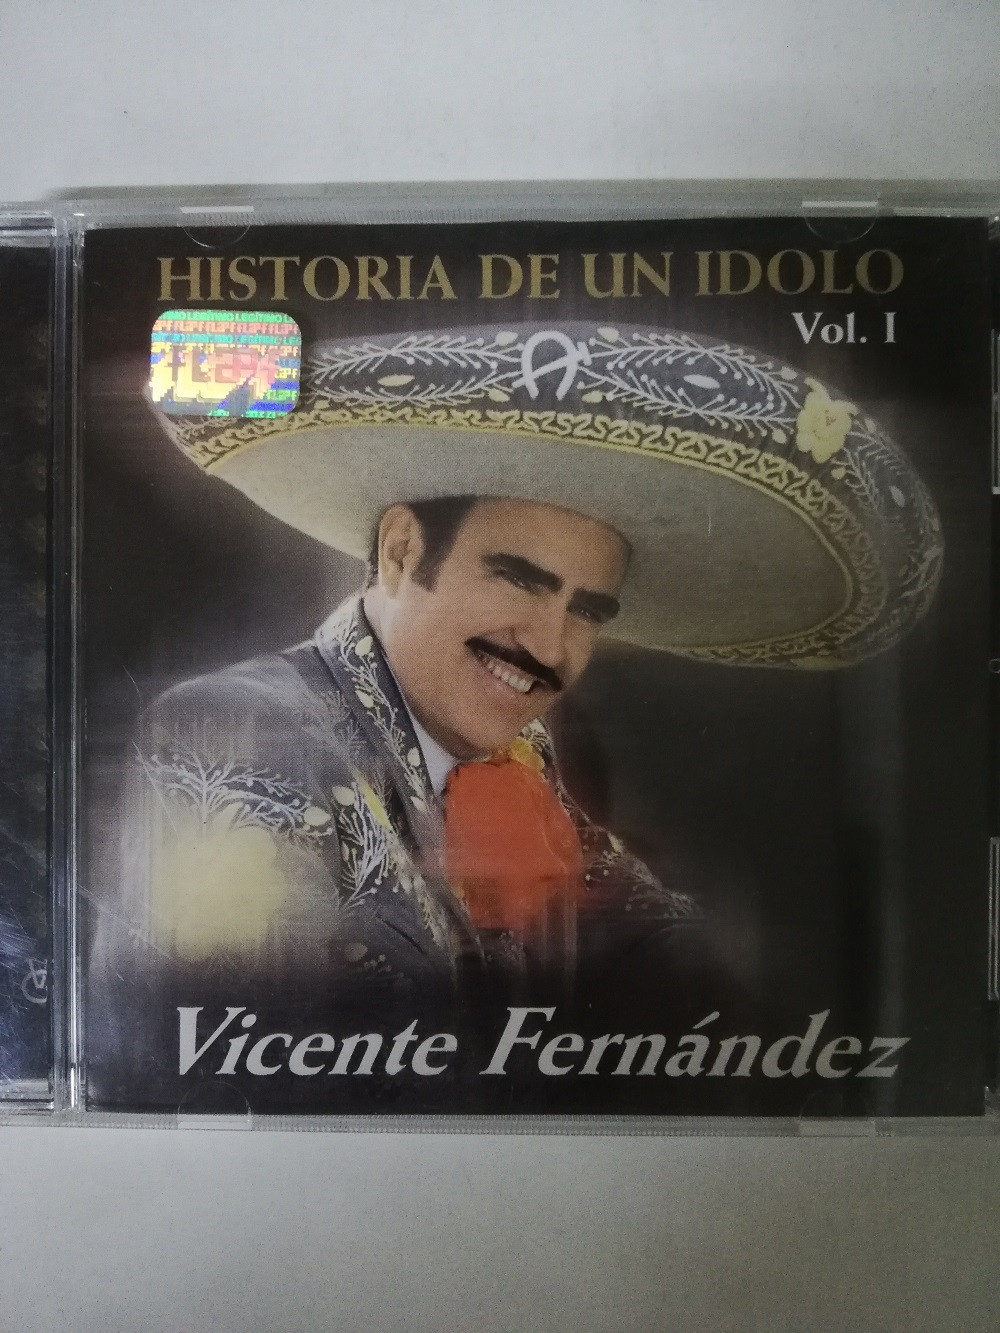 Imagen CD VICENTE FERNANDEZ - HISTORIA DE UN IDOLO VOL. 1 1